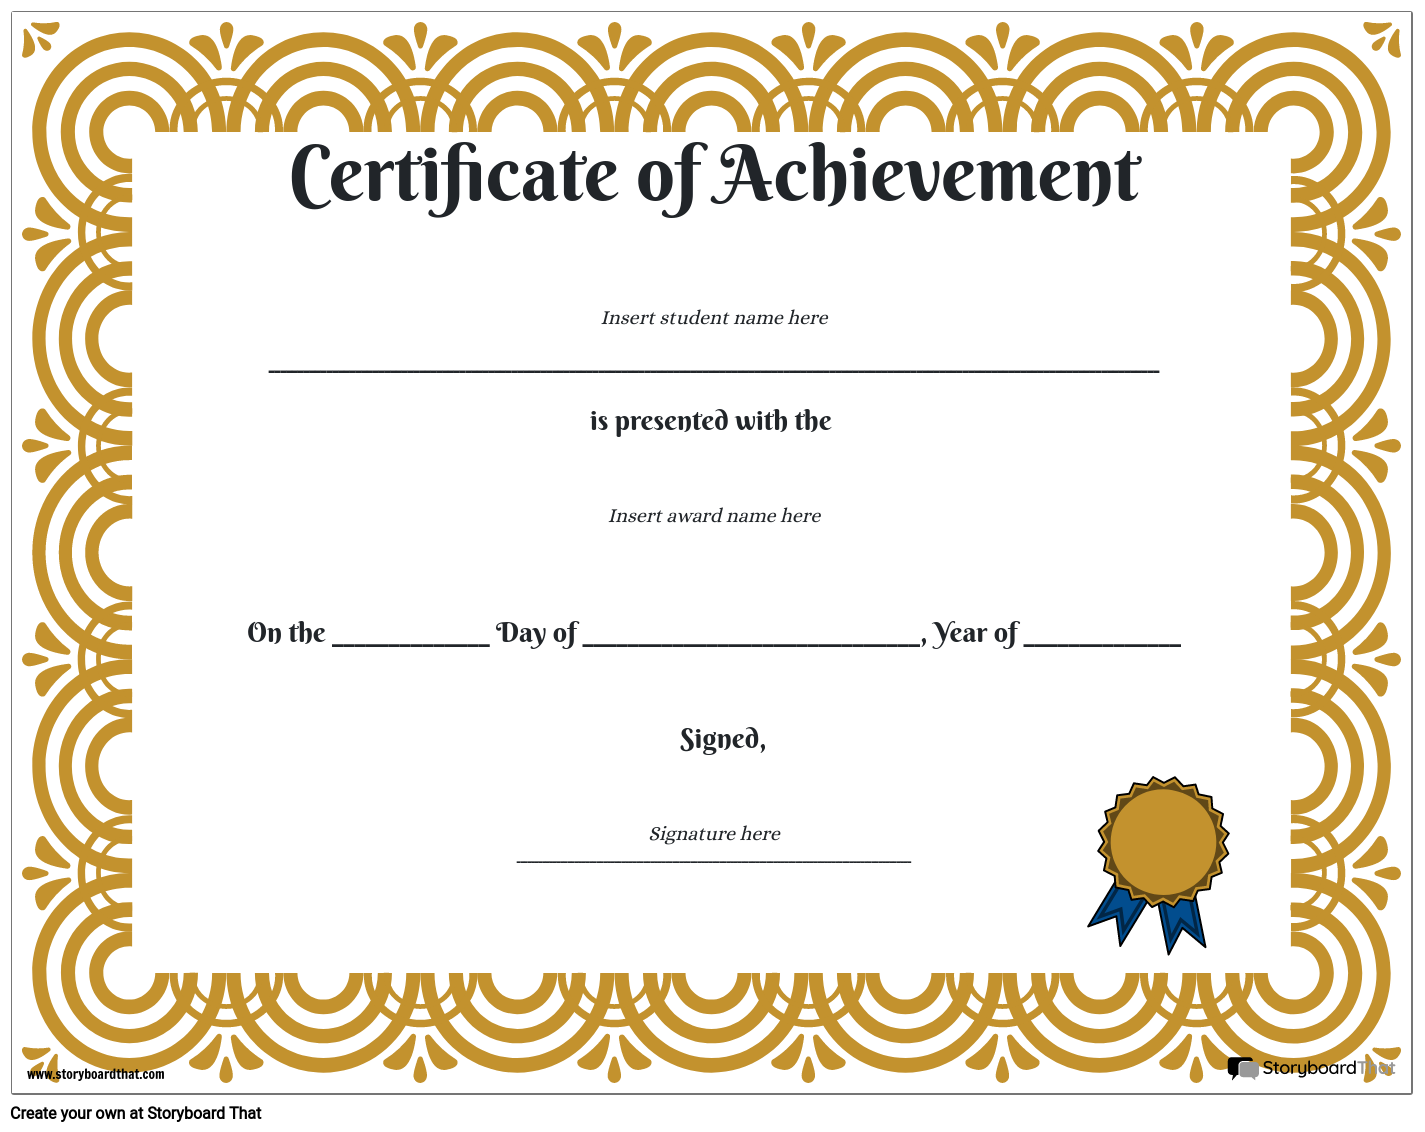 certificate-of-achievement-storyboard-por-worksheet-templates